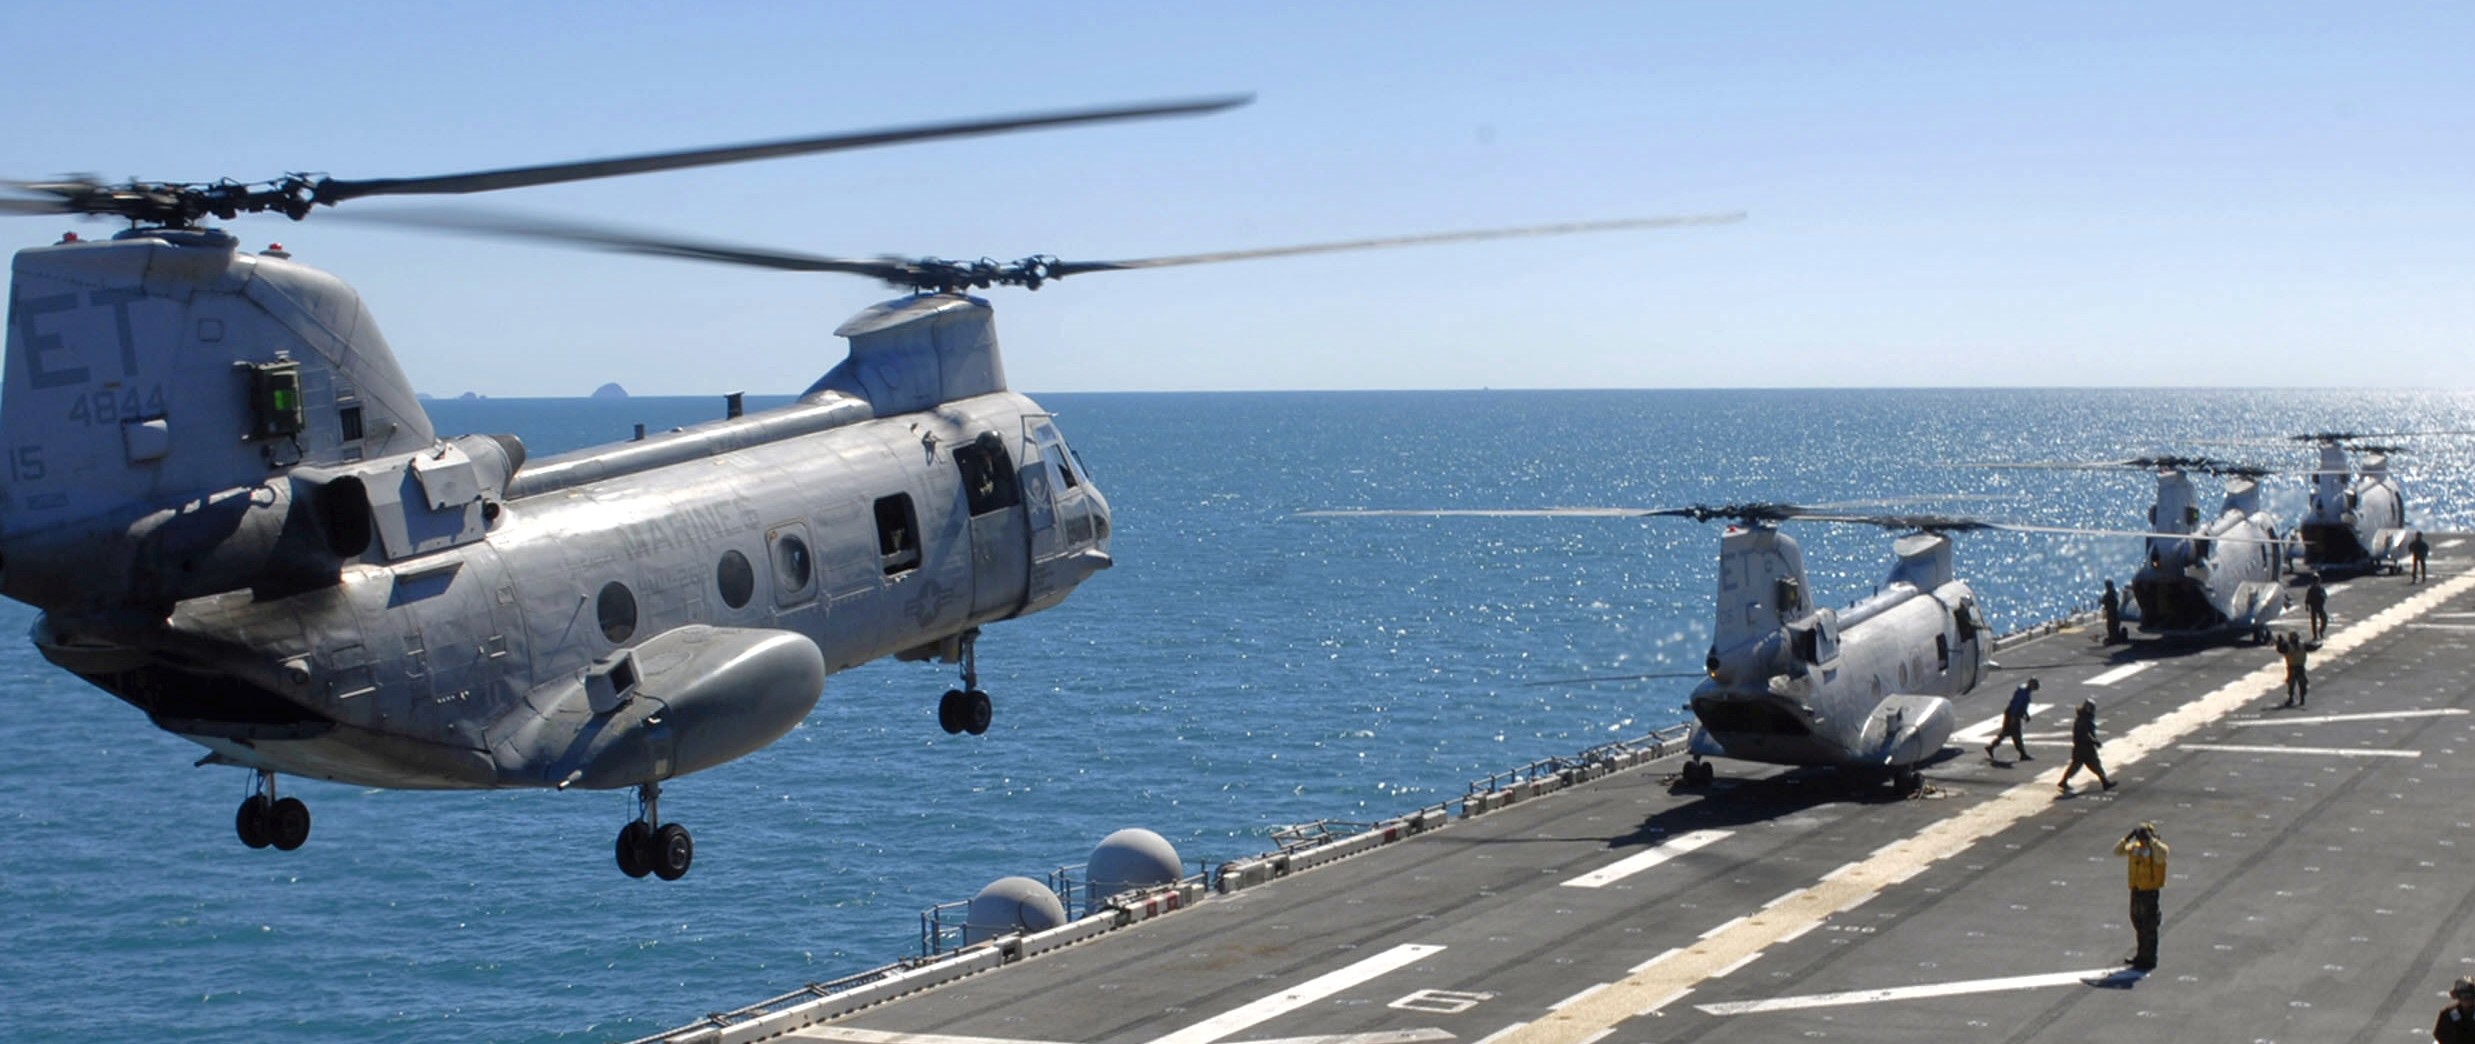 hmm-262 flying tigers ch-46e sea knight marine medium helicopter squadron lhd-2 uss essex 70